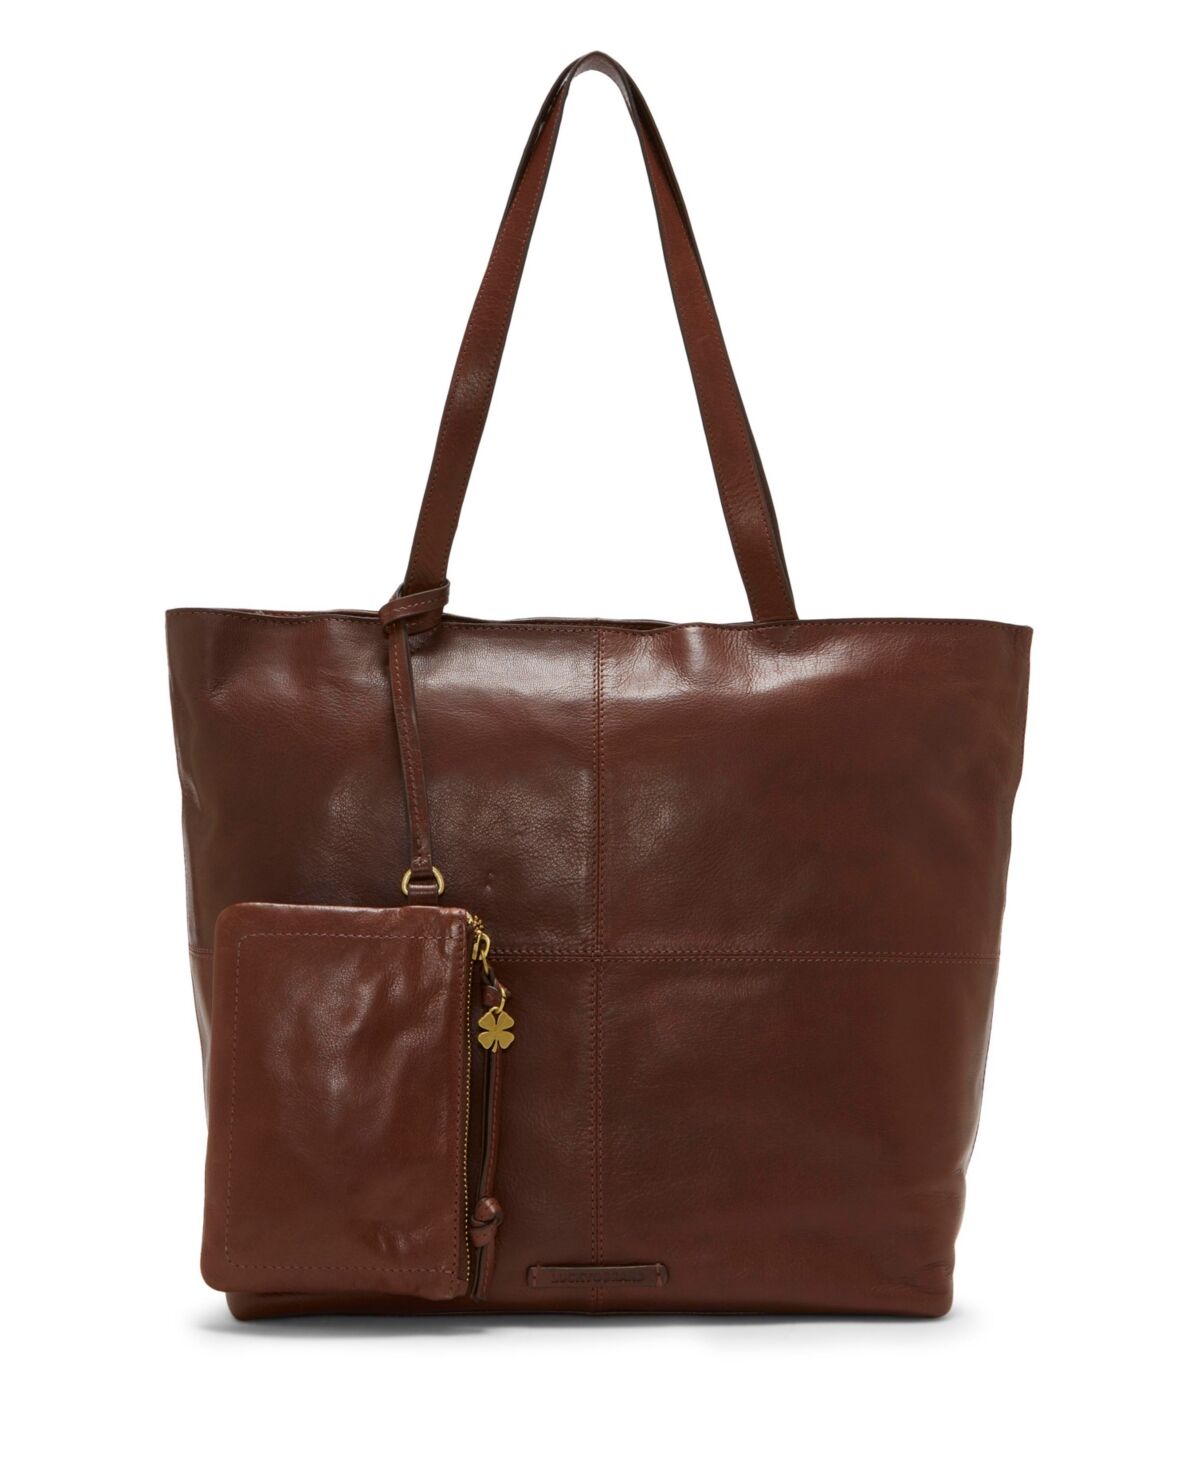 Lucky Brand Women's Kora Leather Tote Handbag - Brandy